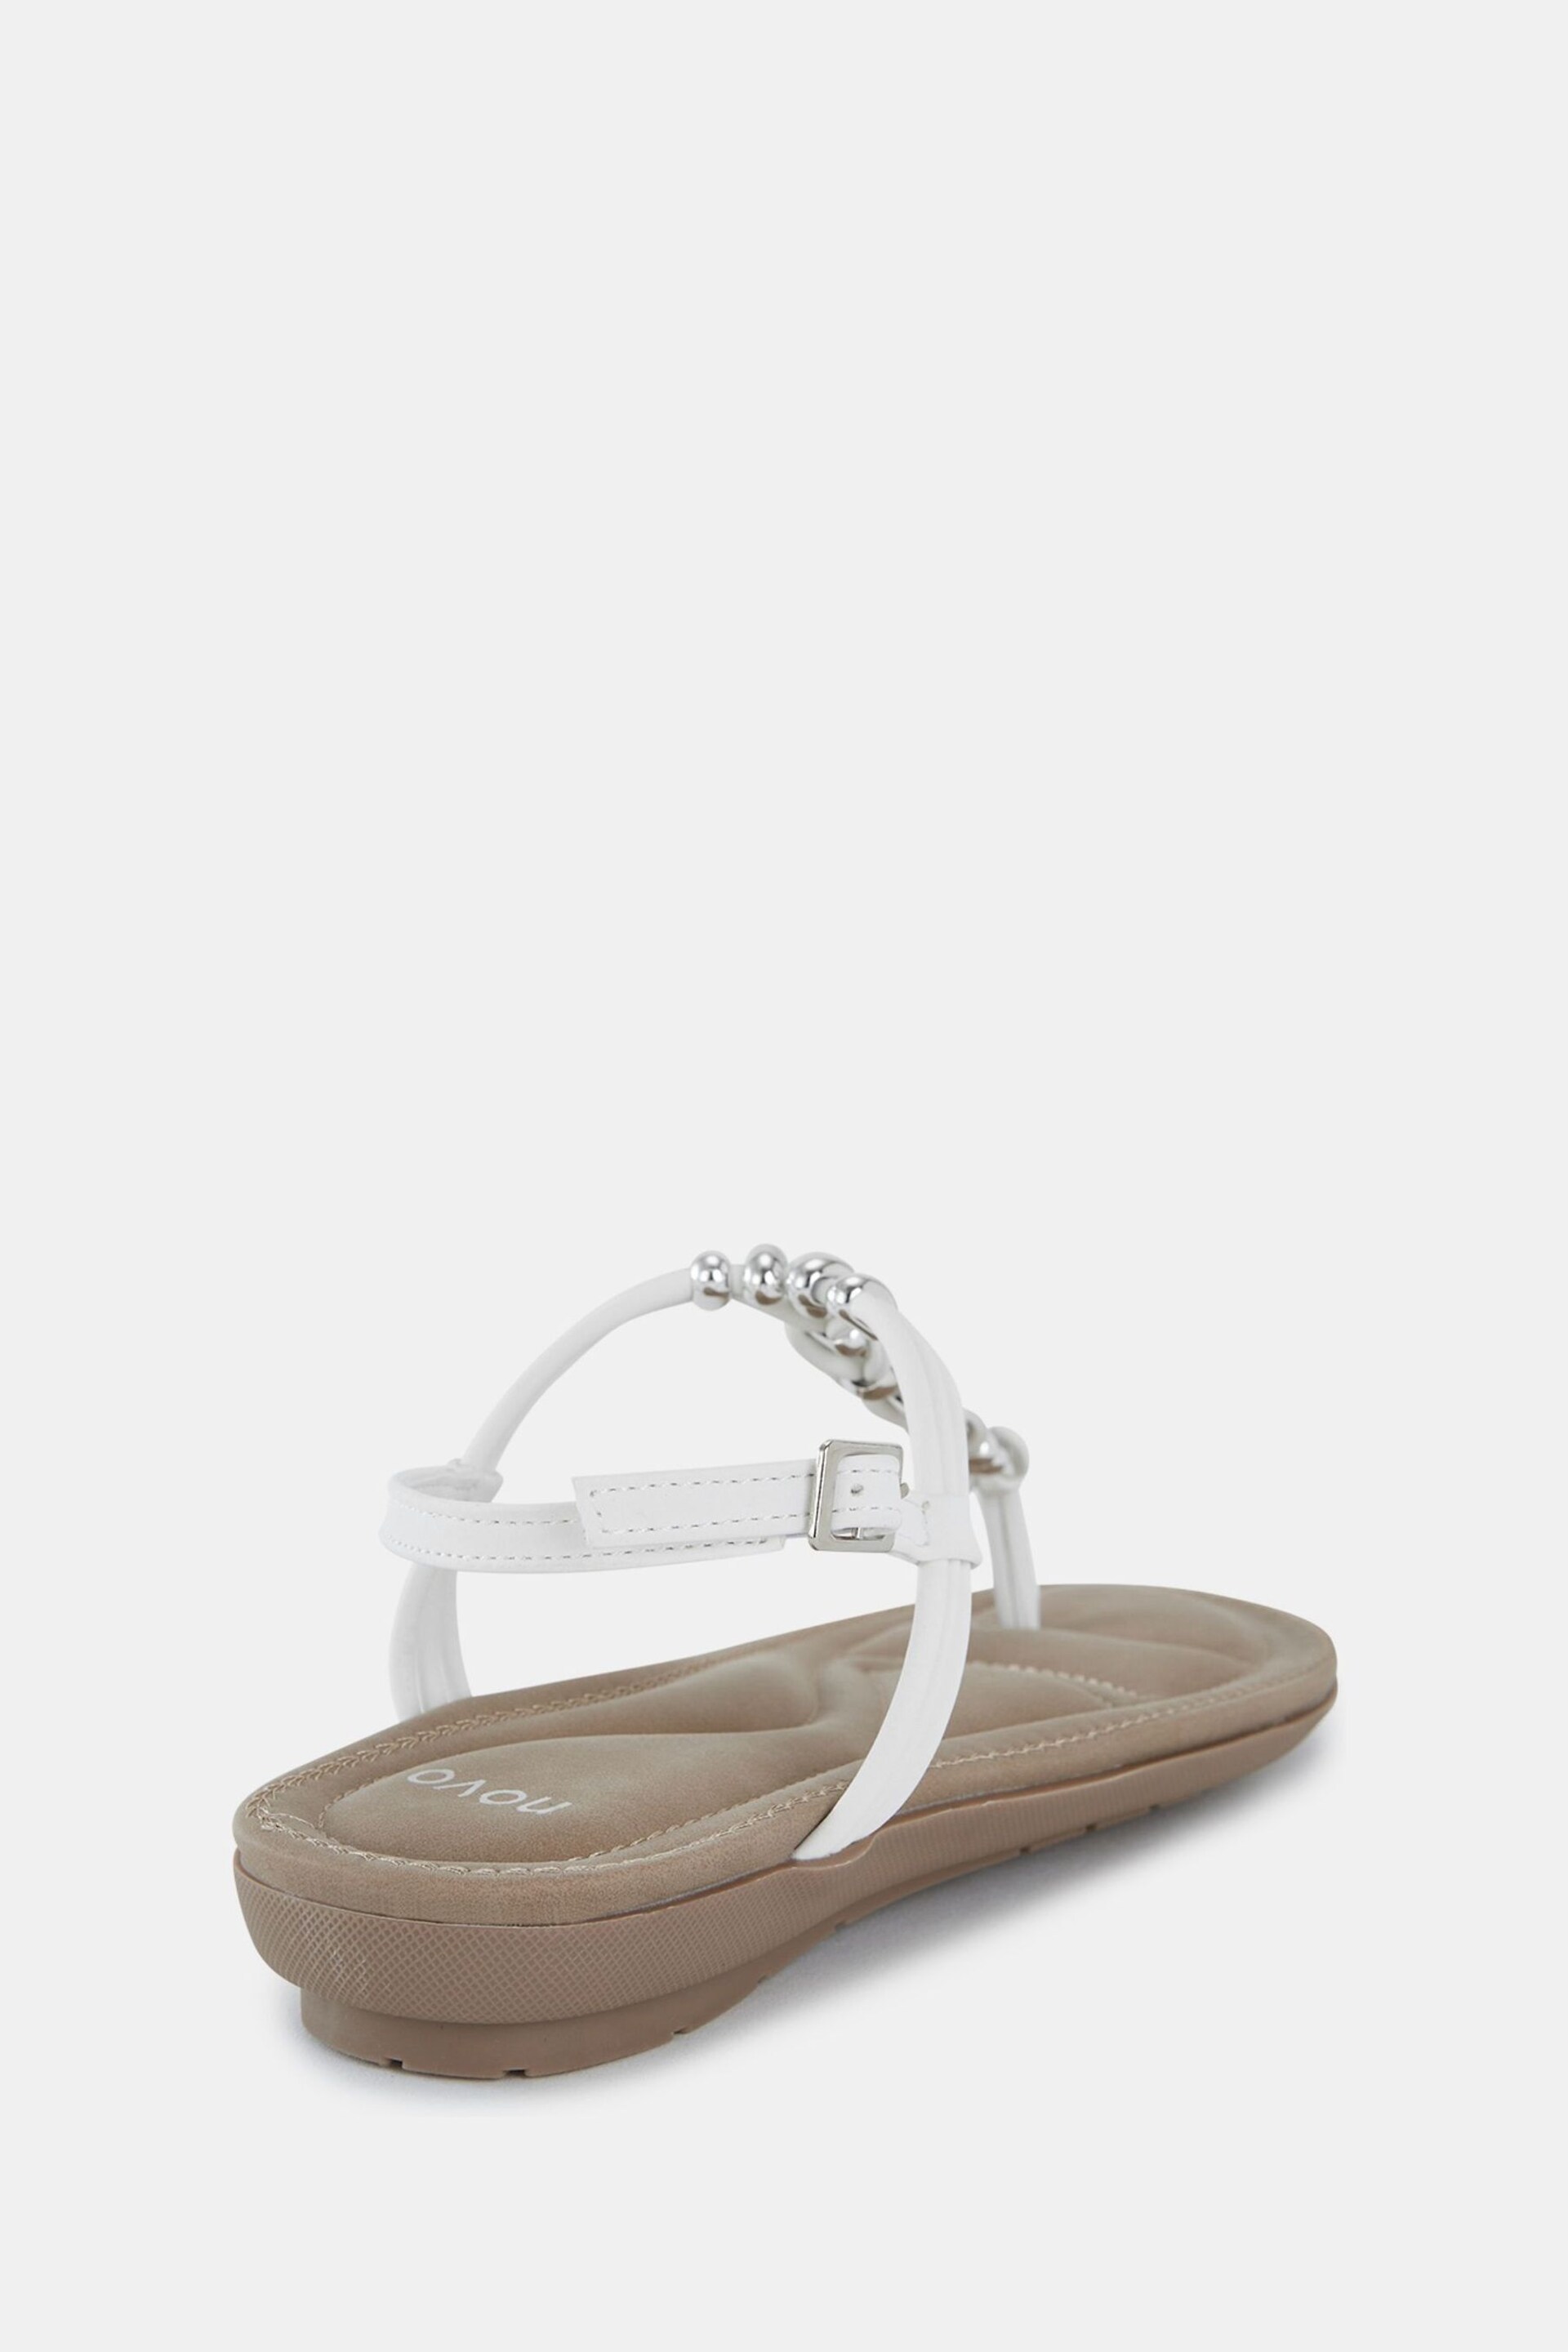 Novo White Tara Toe Post Bead Sandals - Image 6 of 6